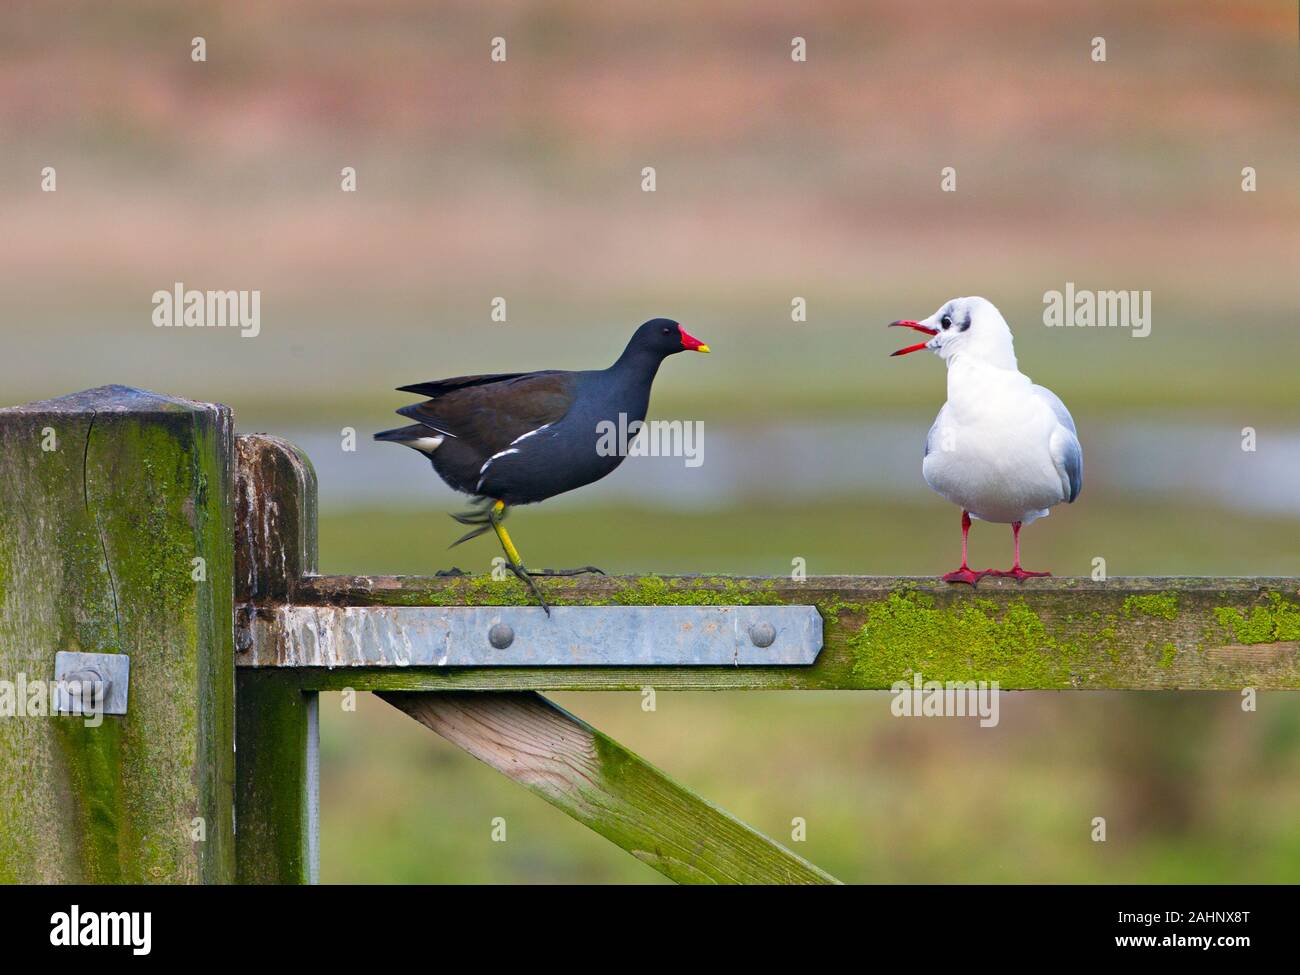 Black Headed Gull Larus Ridibundus and Moorhen on fence Stock Photo